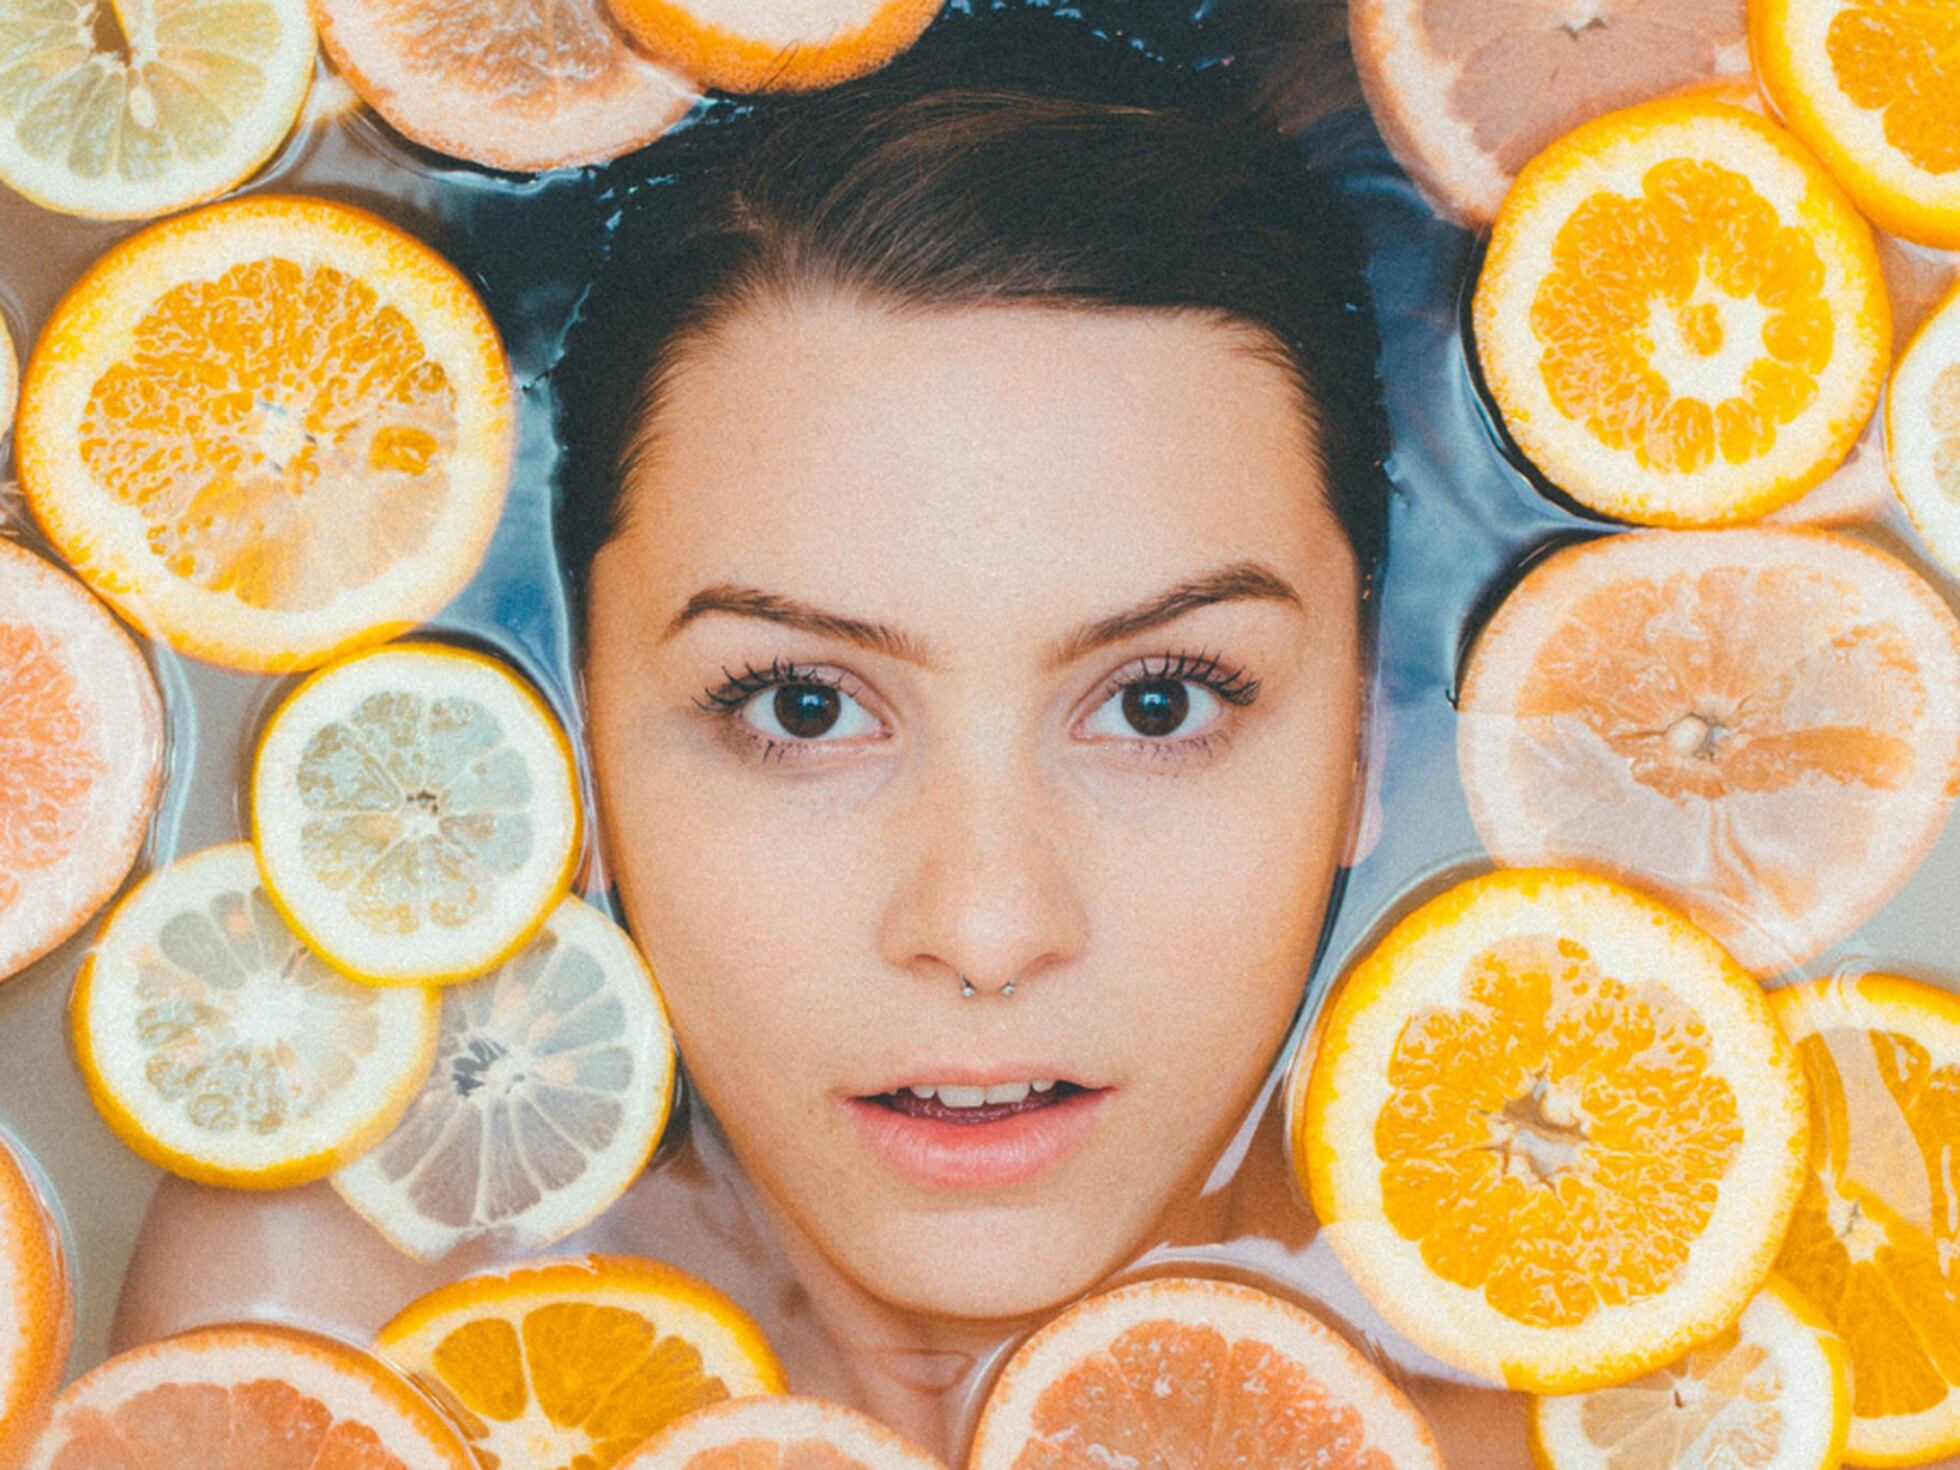 Vitamina C para la cara